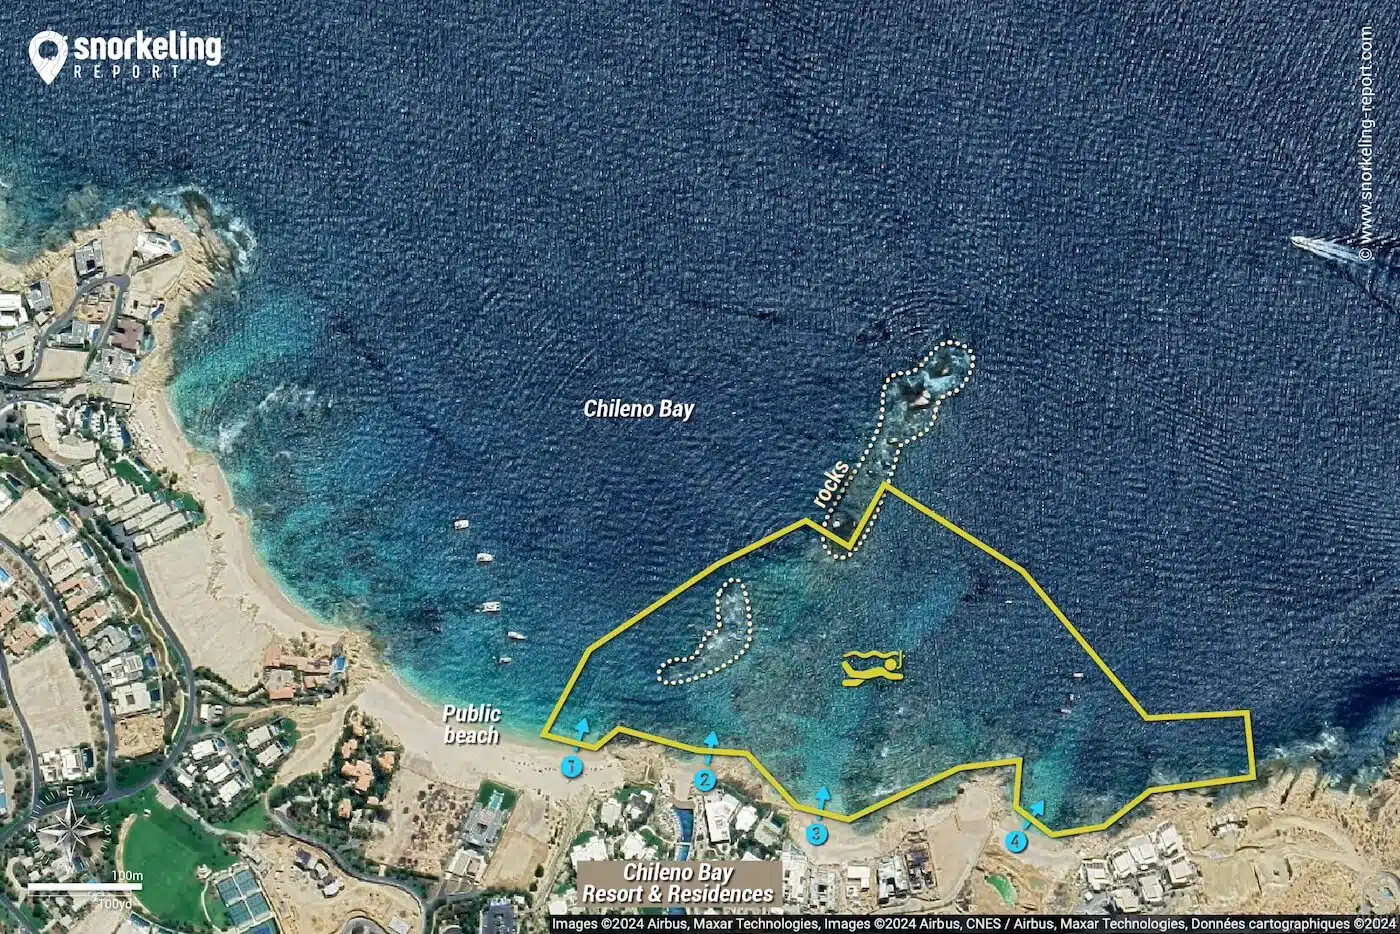 Chileno Bay snorkeling map, Mexico